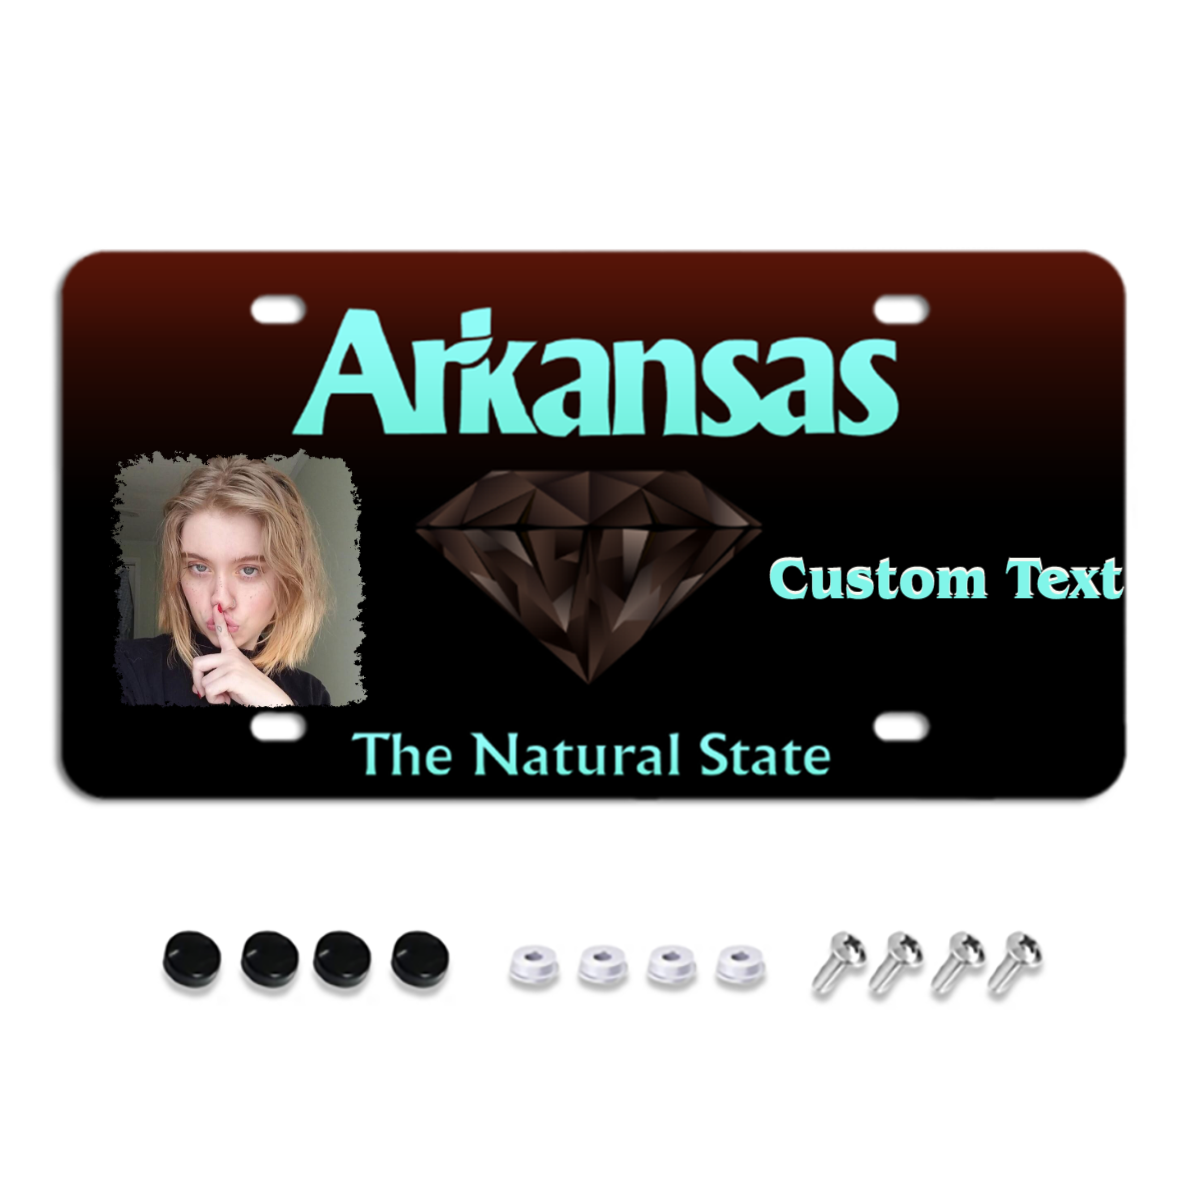 Arkansas Custom License Plates, Personalized Photo & Text & Background